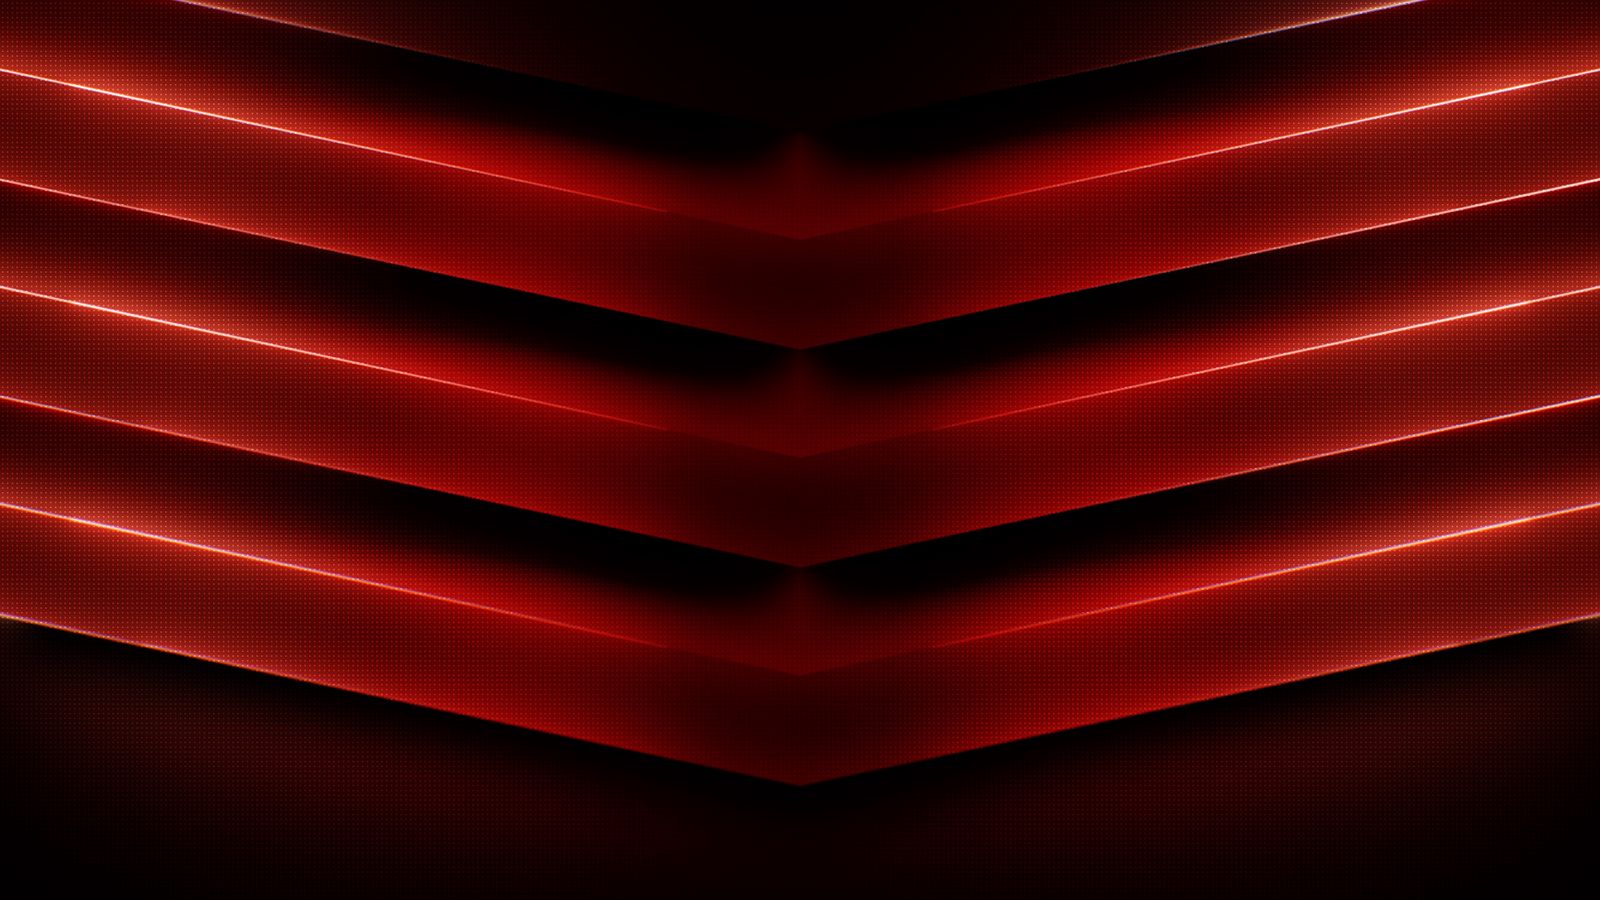 Download wallpaper 1600x900 lines, red, glow, dark, black widescreen 16:9  hd background